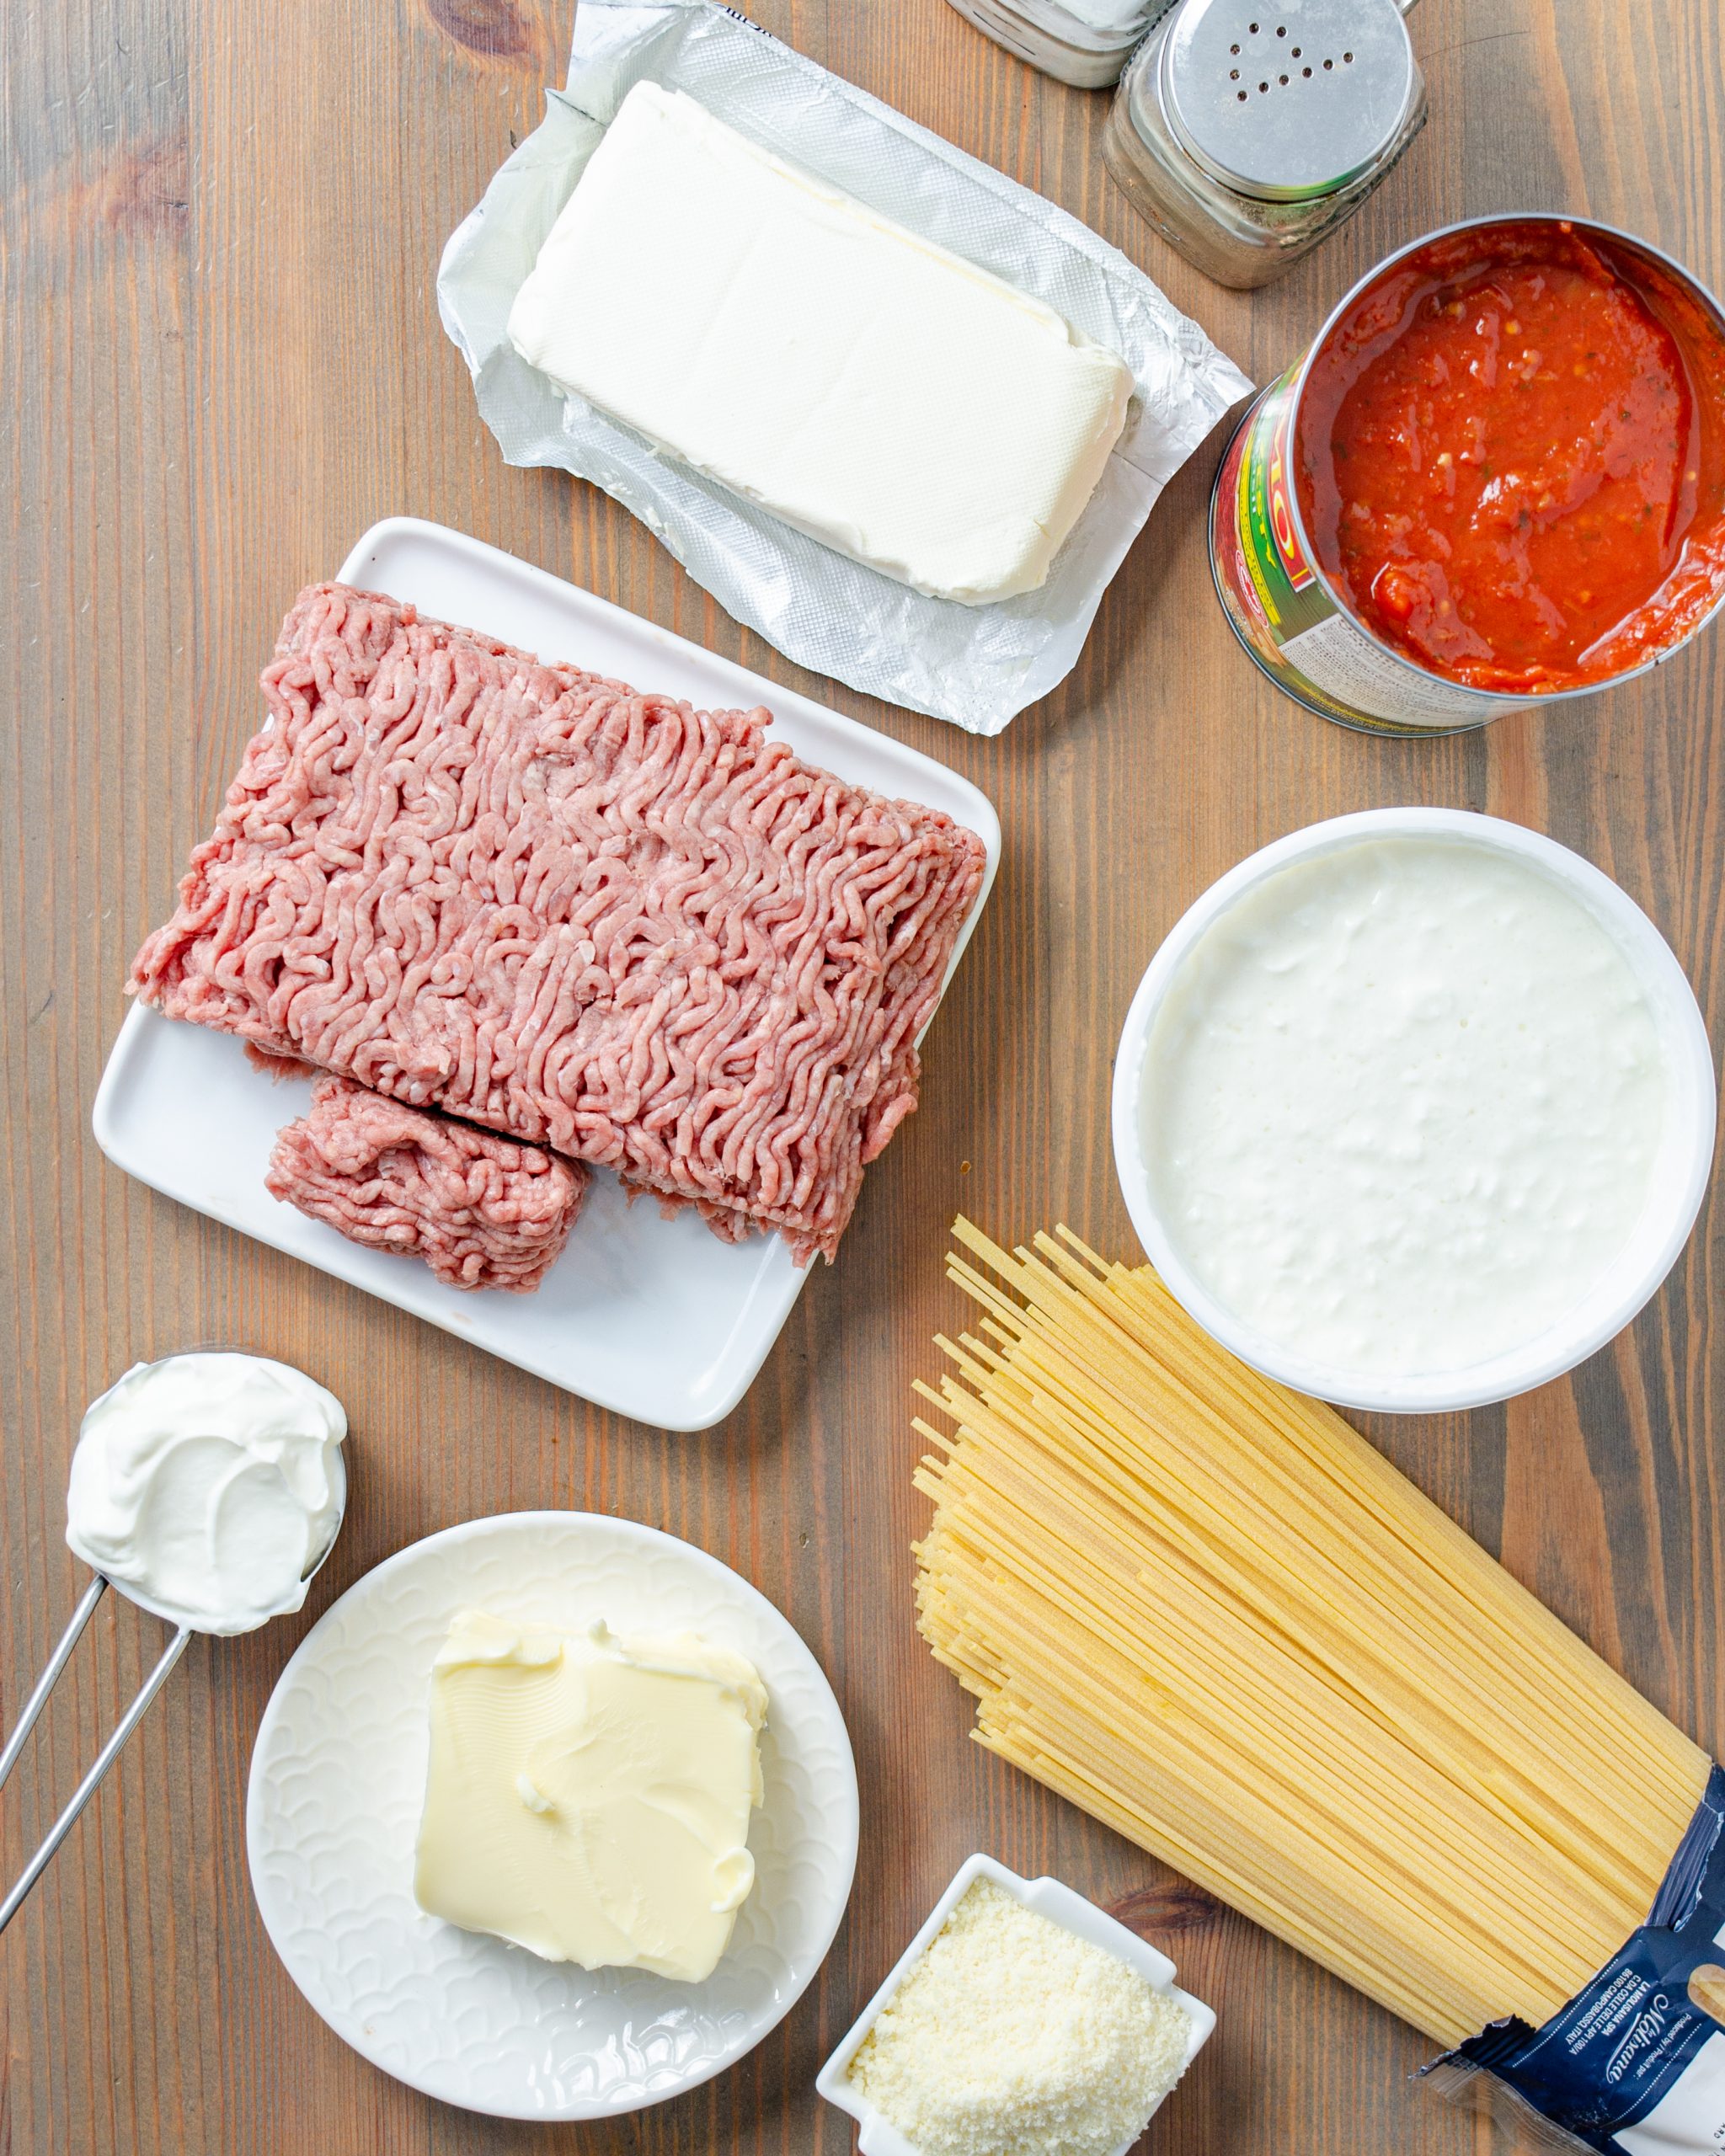 Million Dollar Spaghetti Casserole ingredients